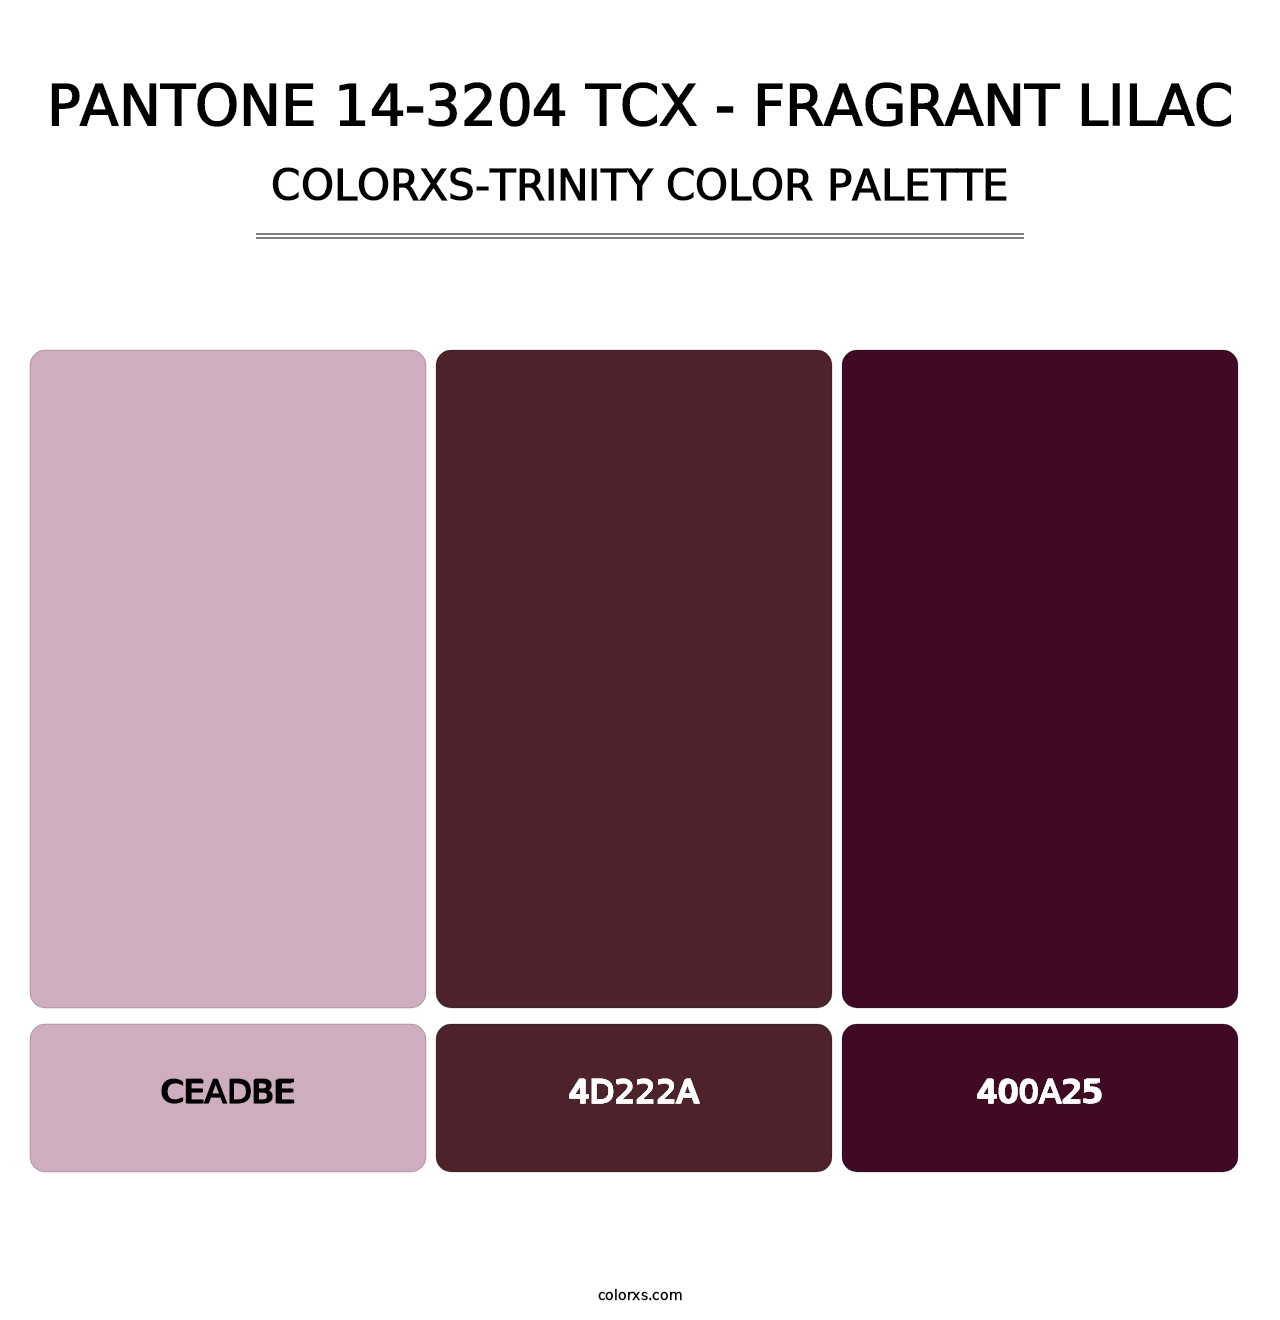 PANTONE 14-3204 TCX - Fragrant Lilac - Colorxs Trinity Palette